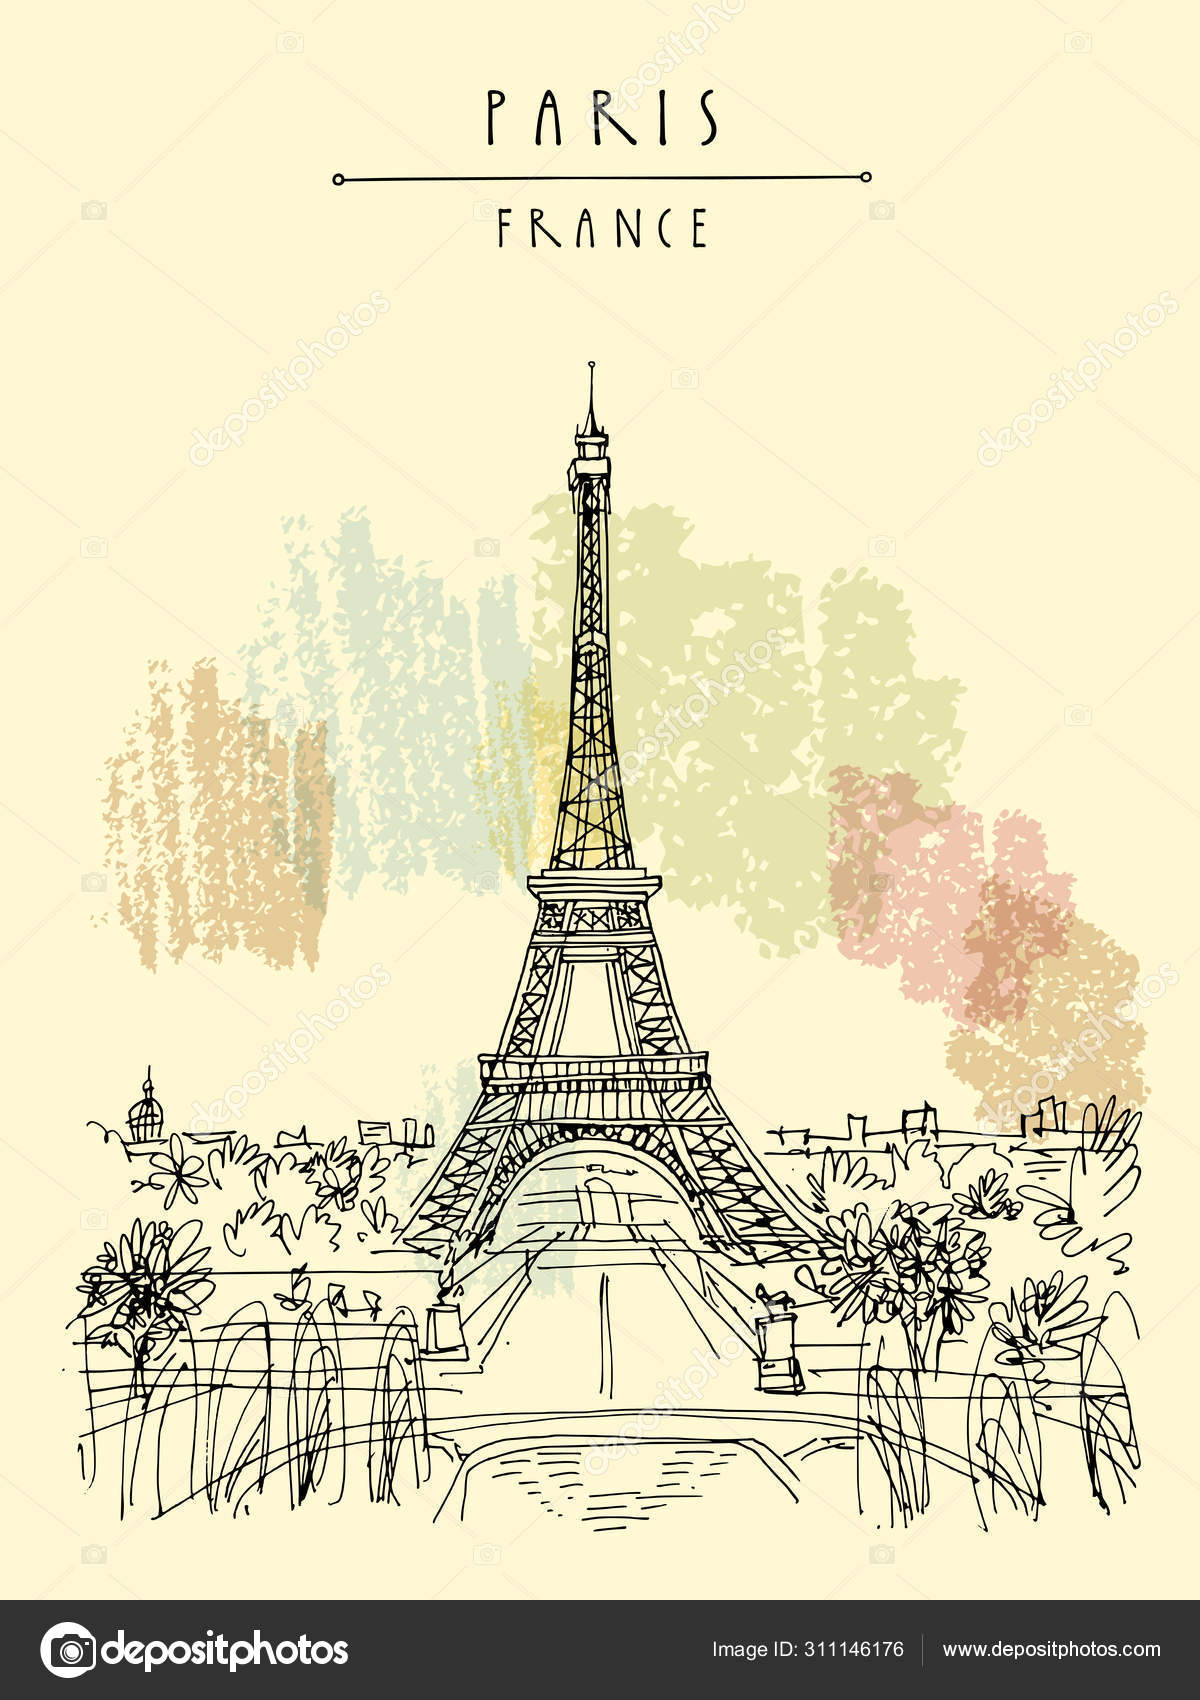 Eiffel Tower Paris French France Europe European Travel Poster Advertisement 